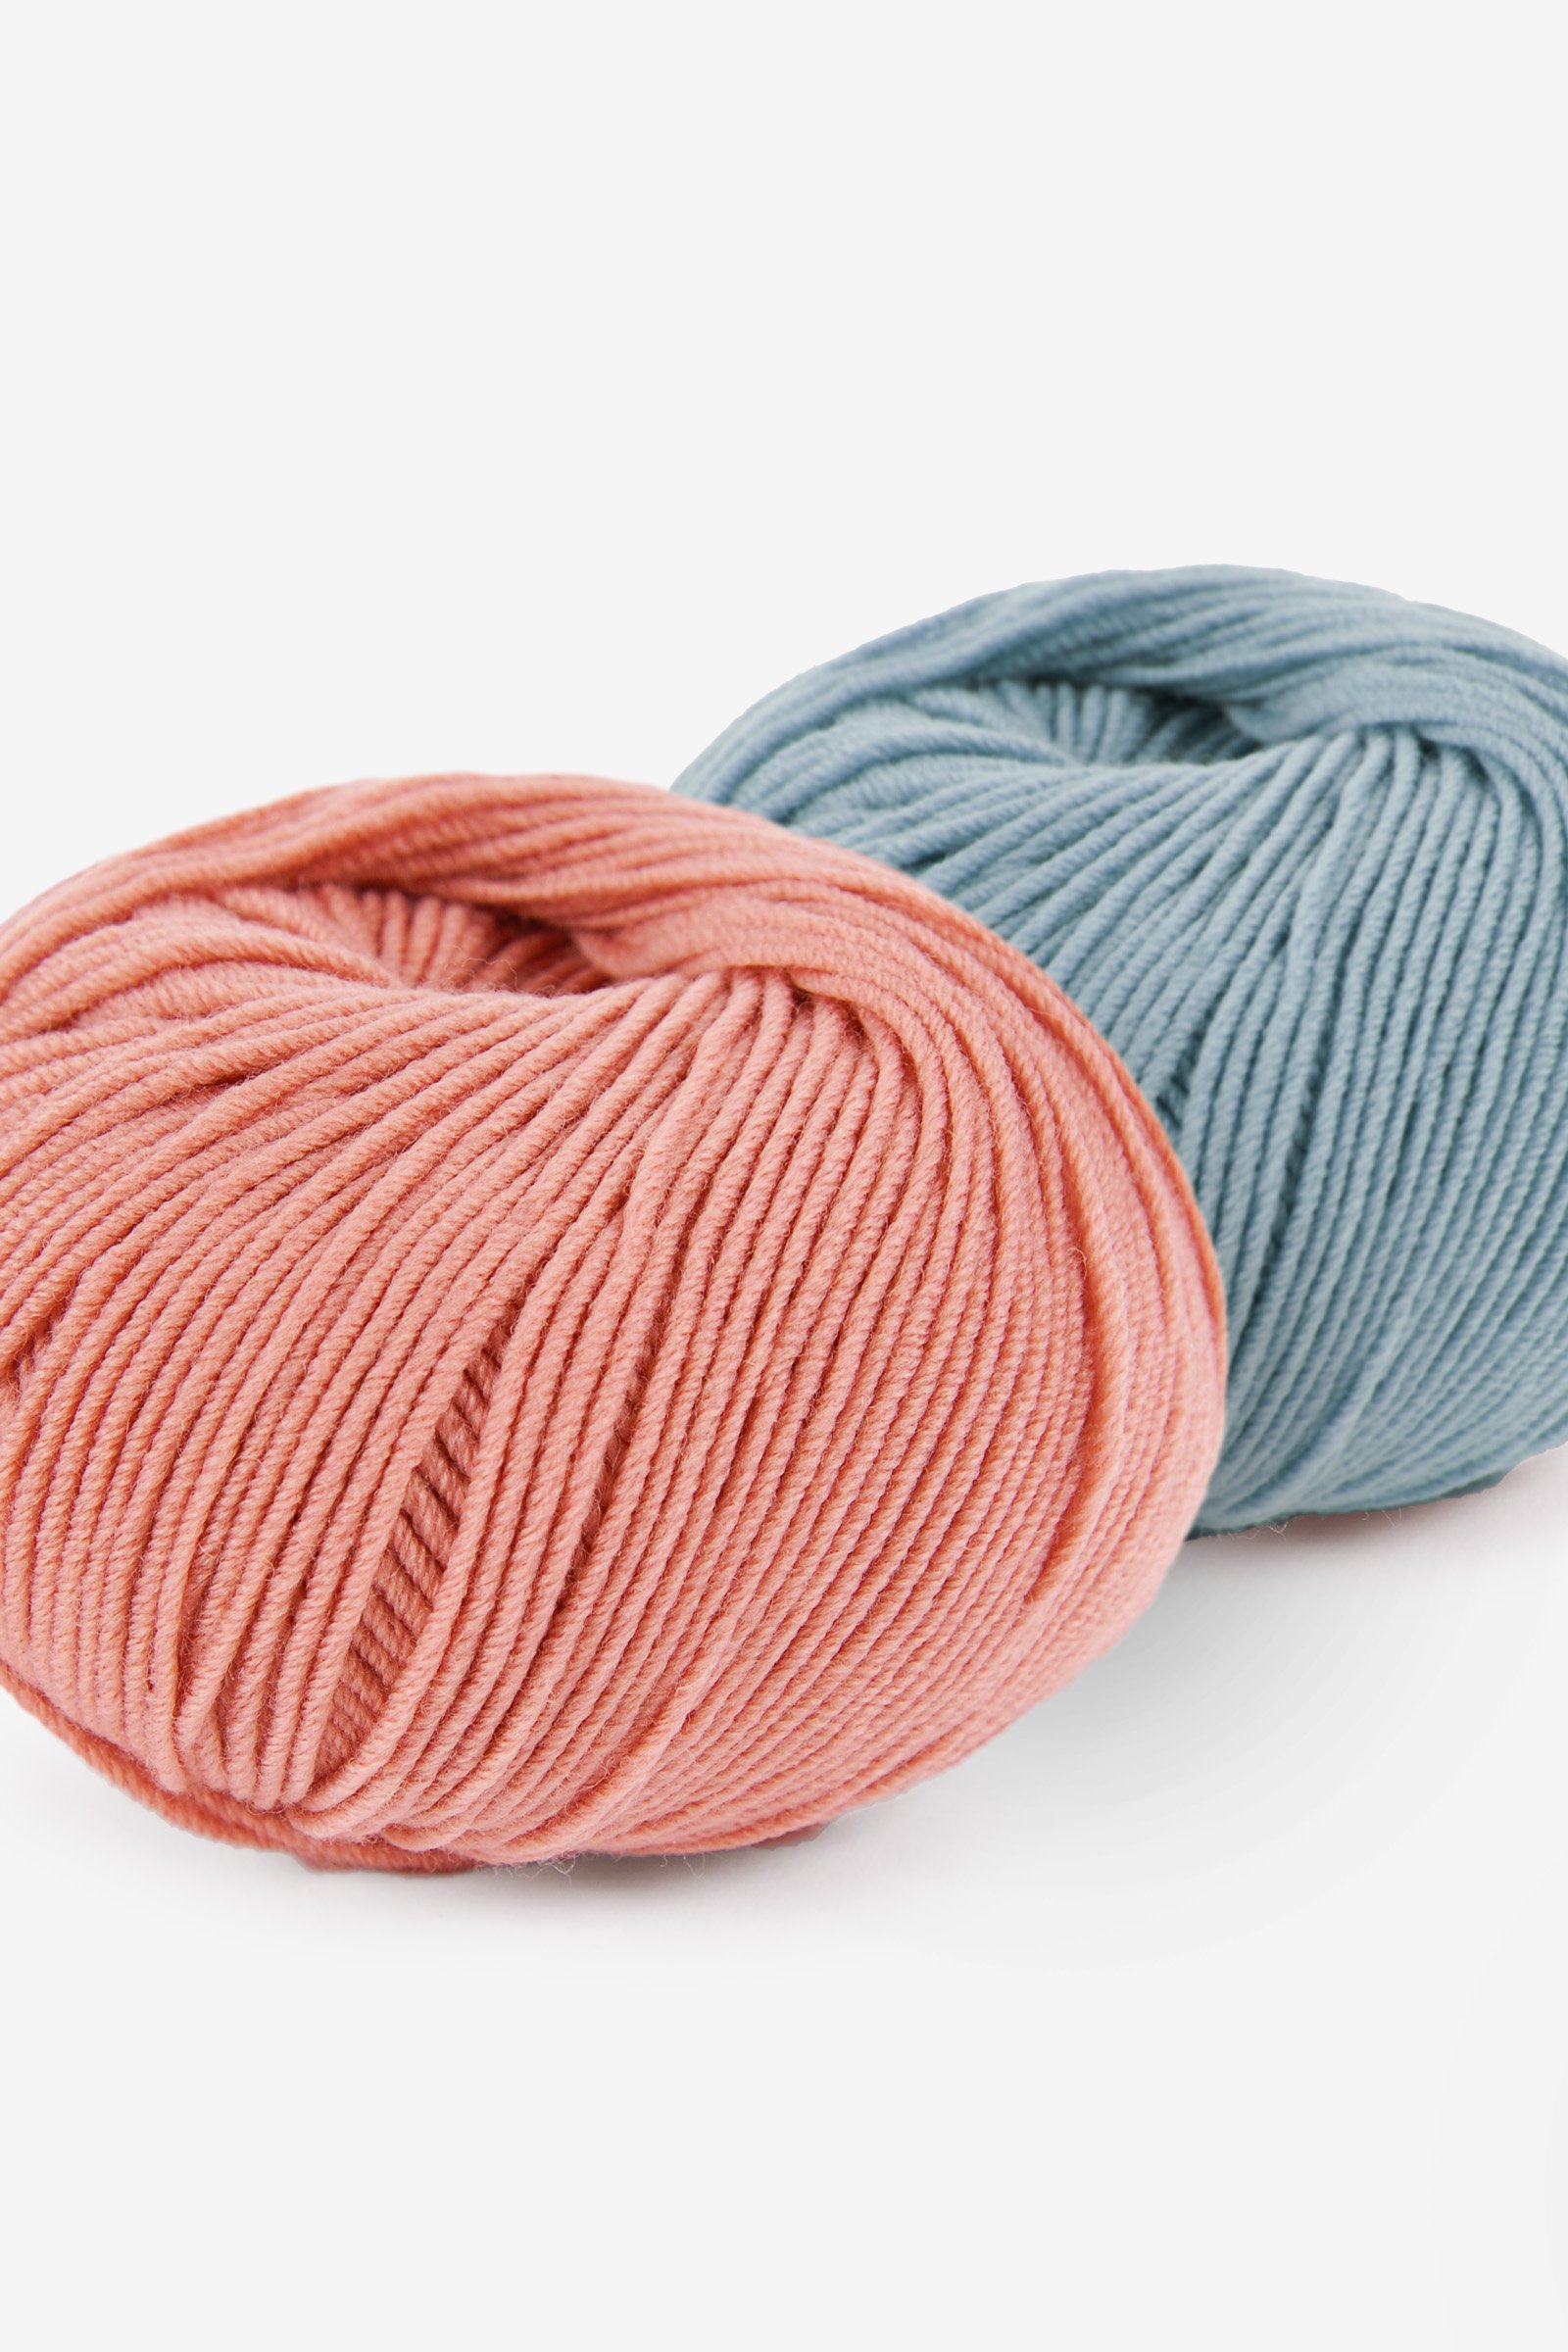 Woolly natural knitting lãna merino